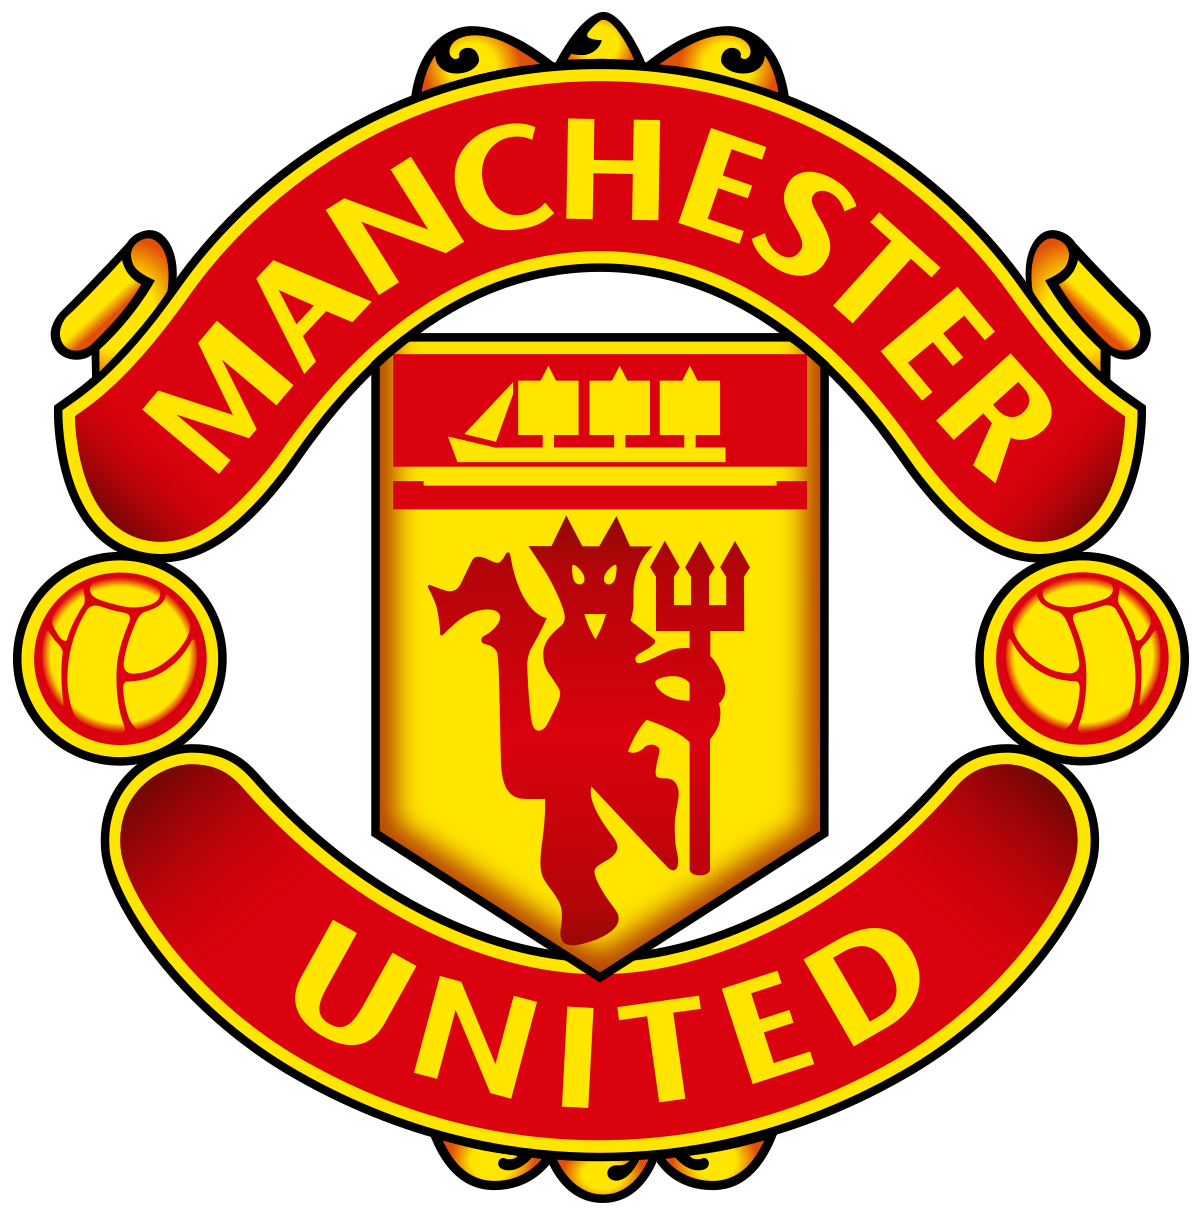 Manchester United F.C. - Wikipedia